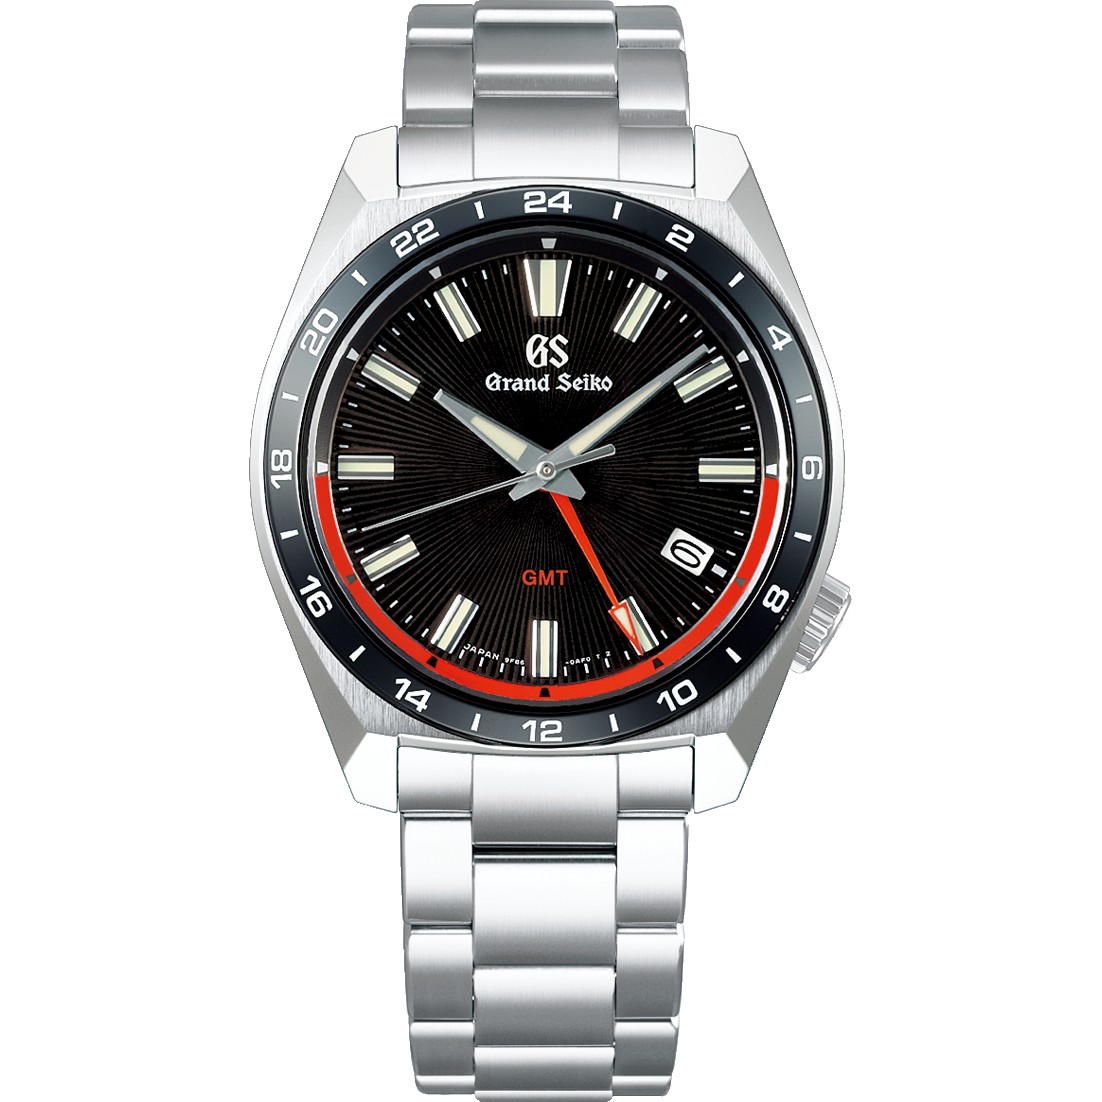 Grand Seiko SBGN019 quartz GMT, black dial, stainless steel and ceramic case, men's watches